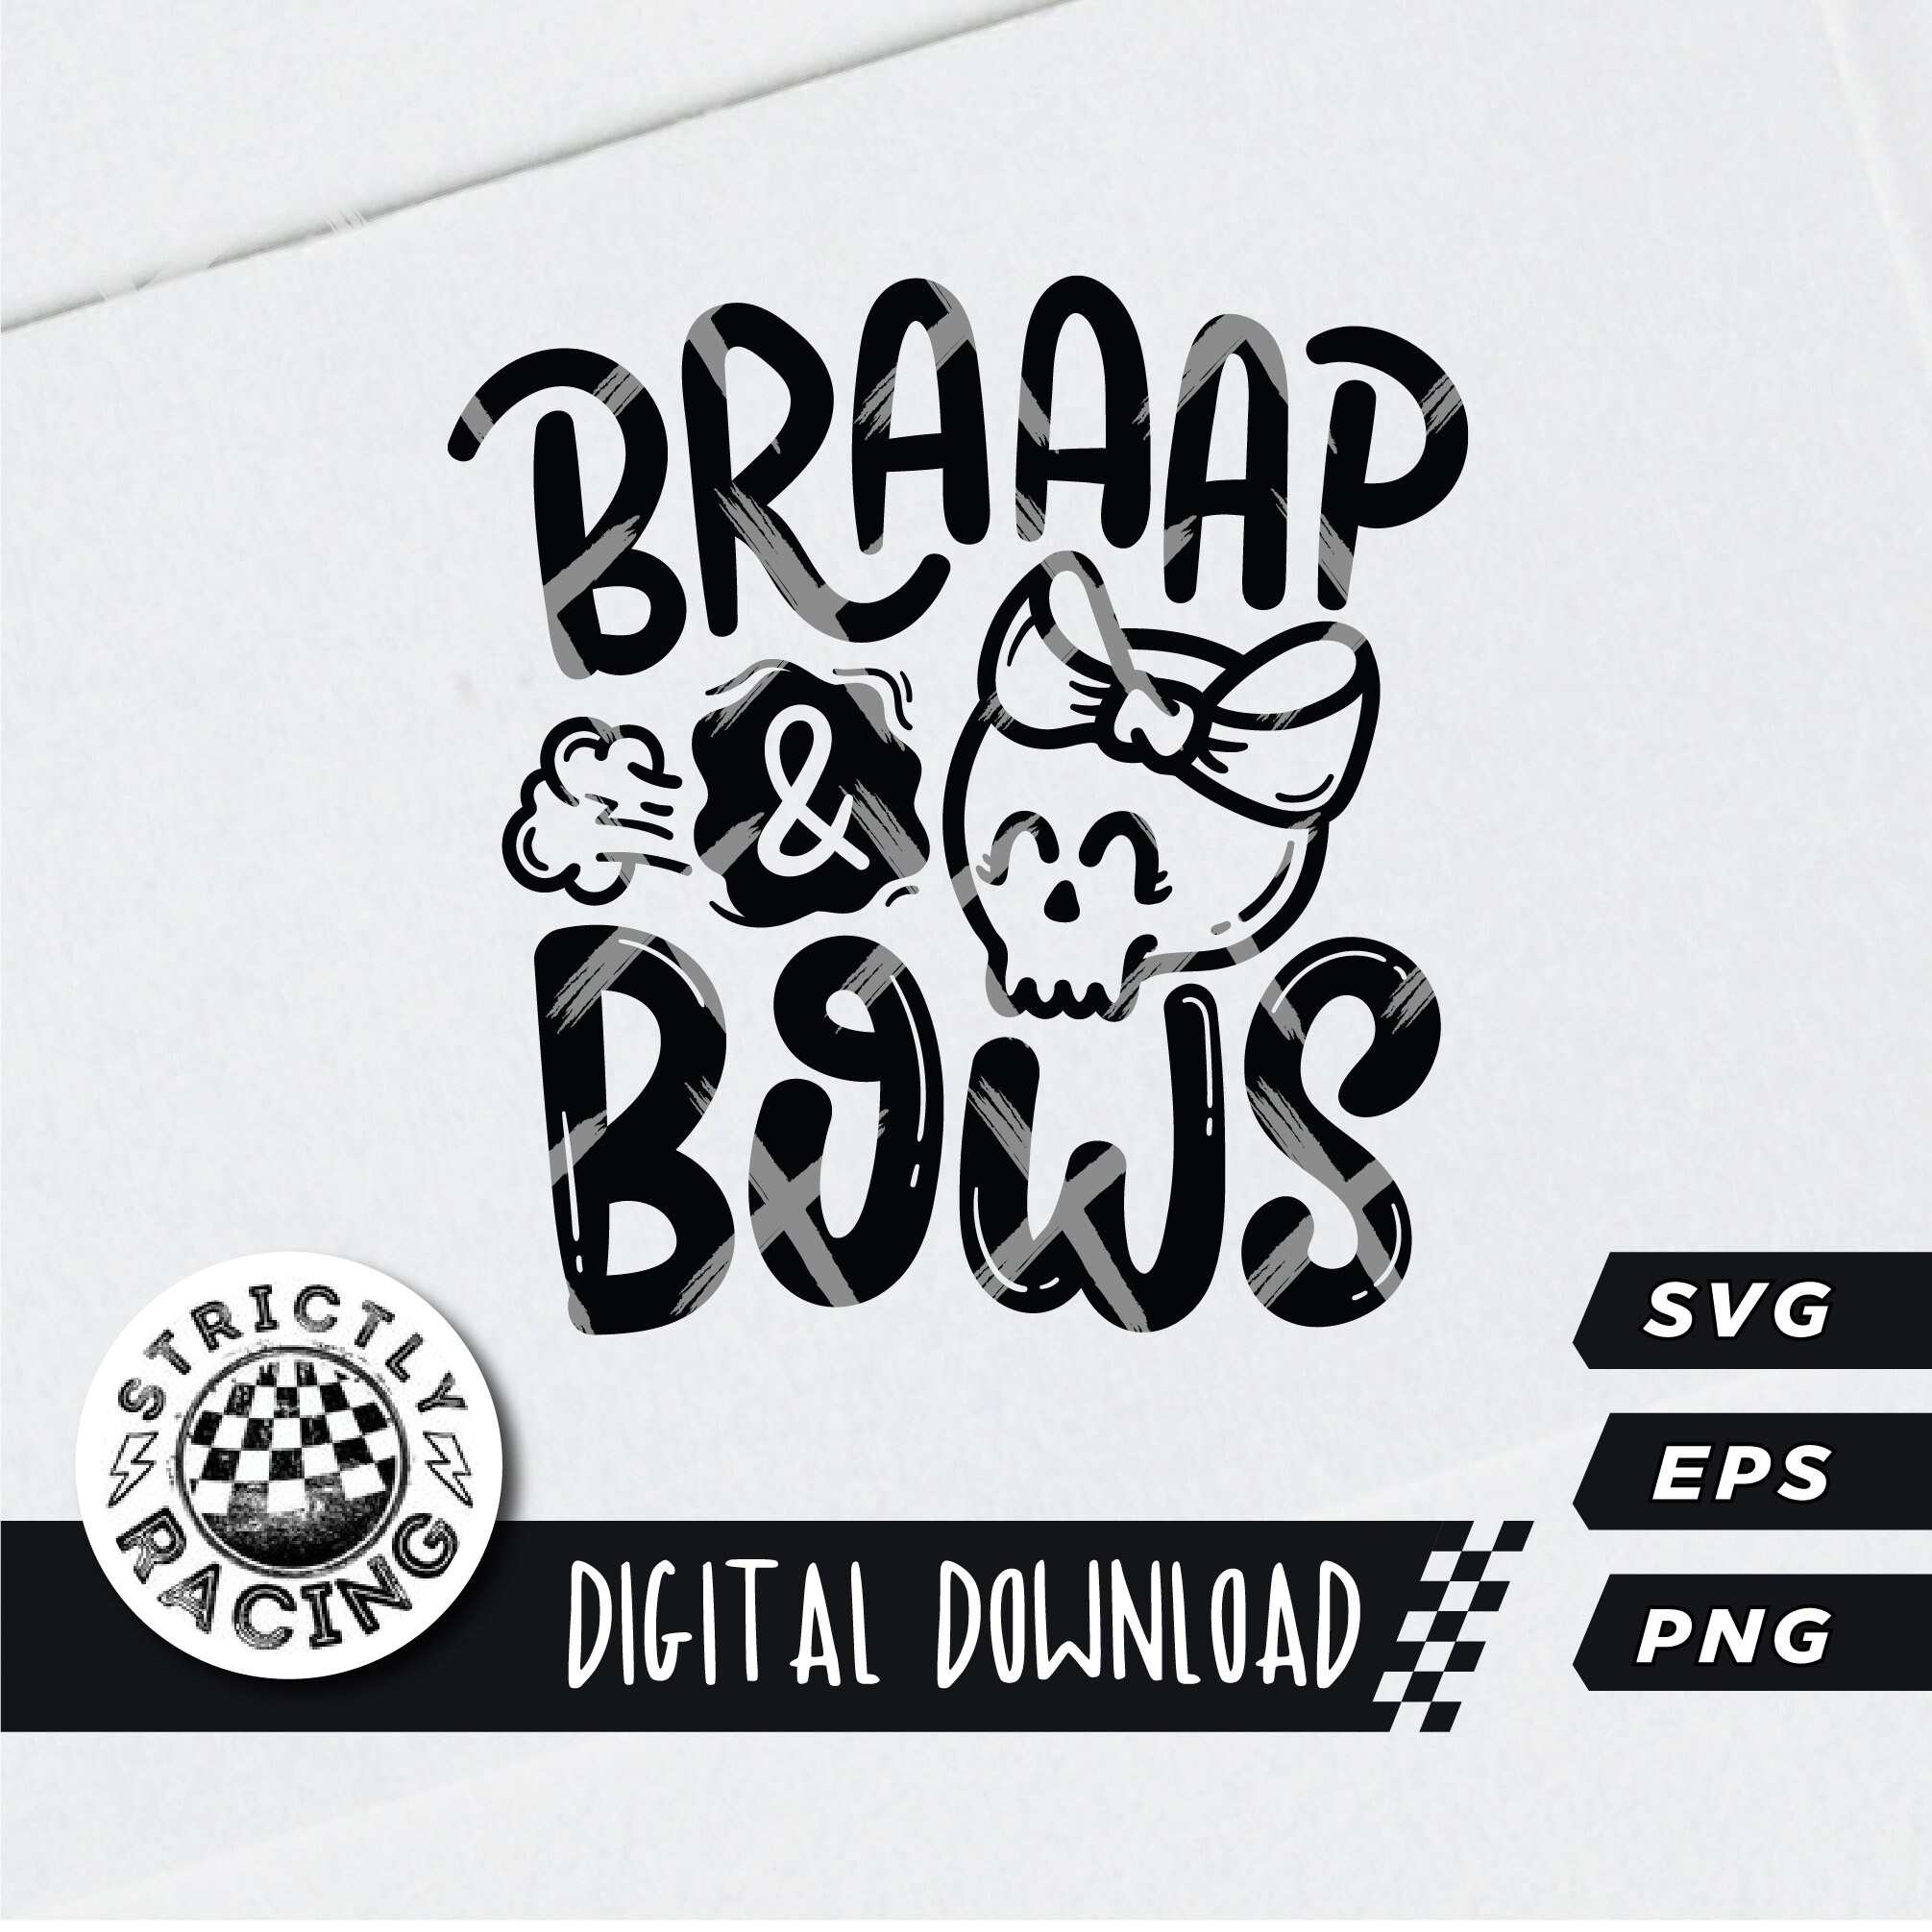 BRAAP BRAAP! jogo online gratuito em